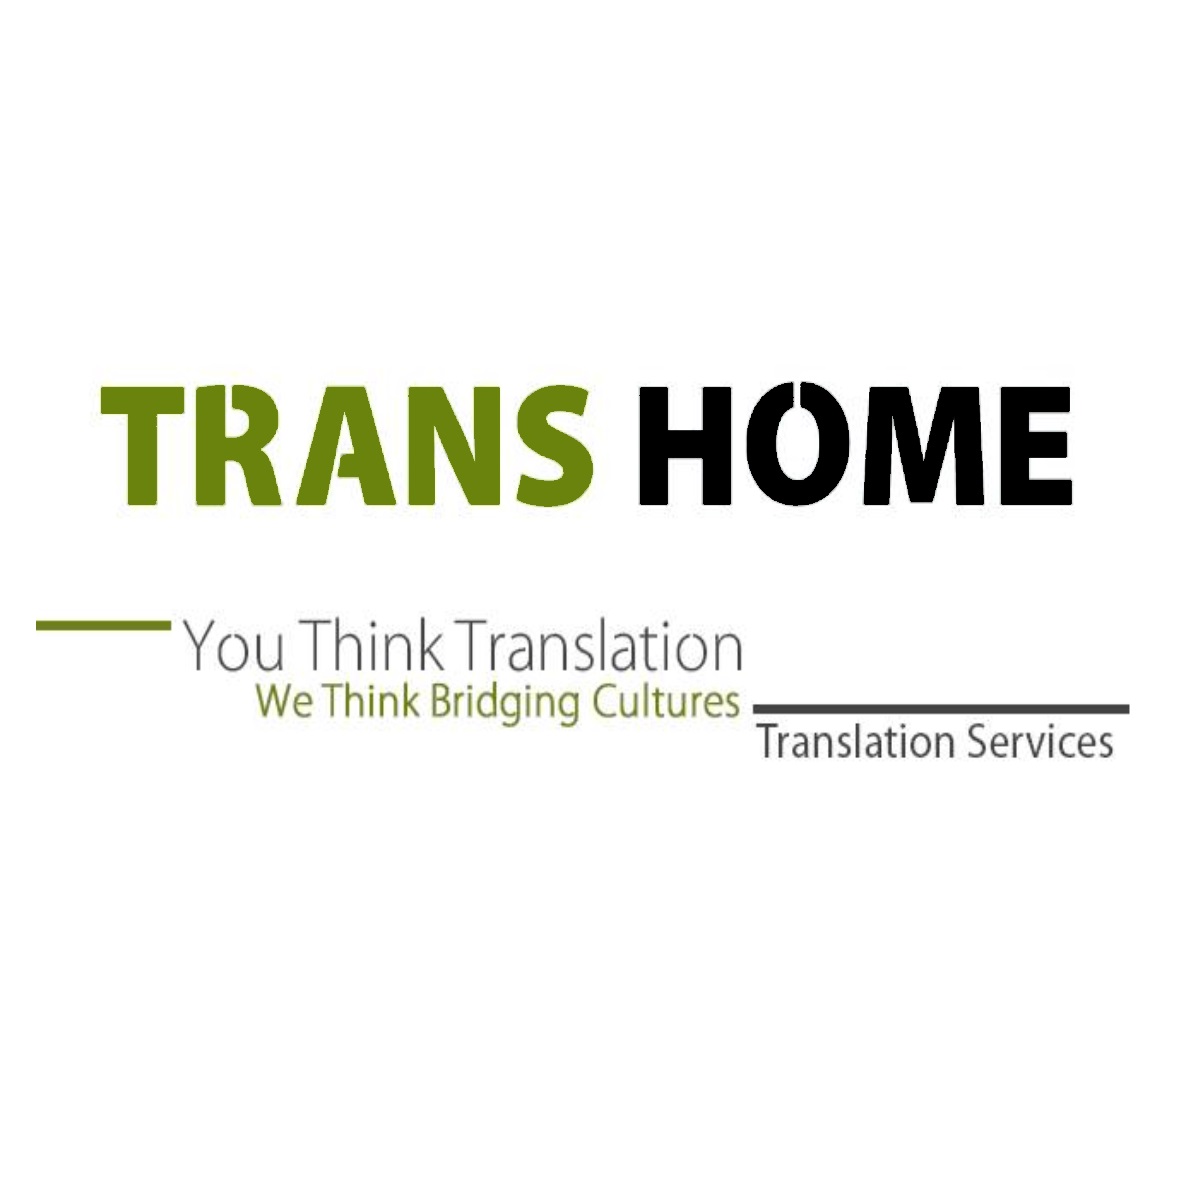 TransHome Translation Services